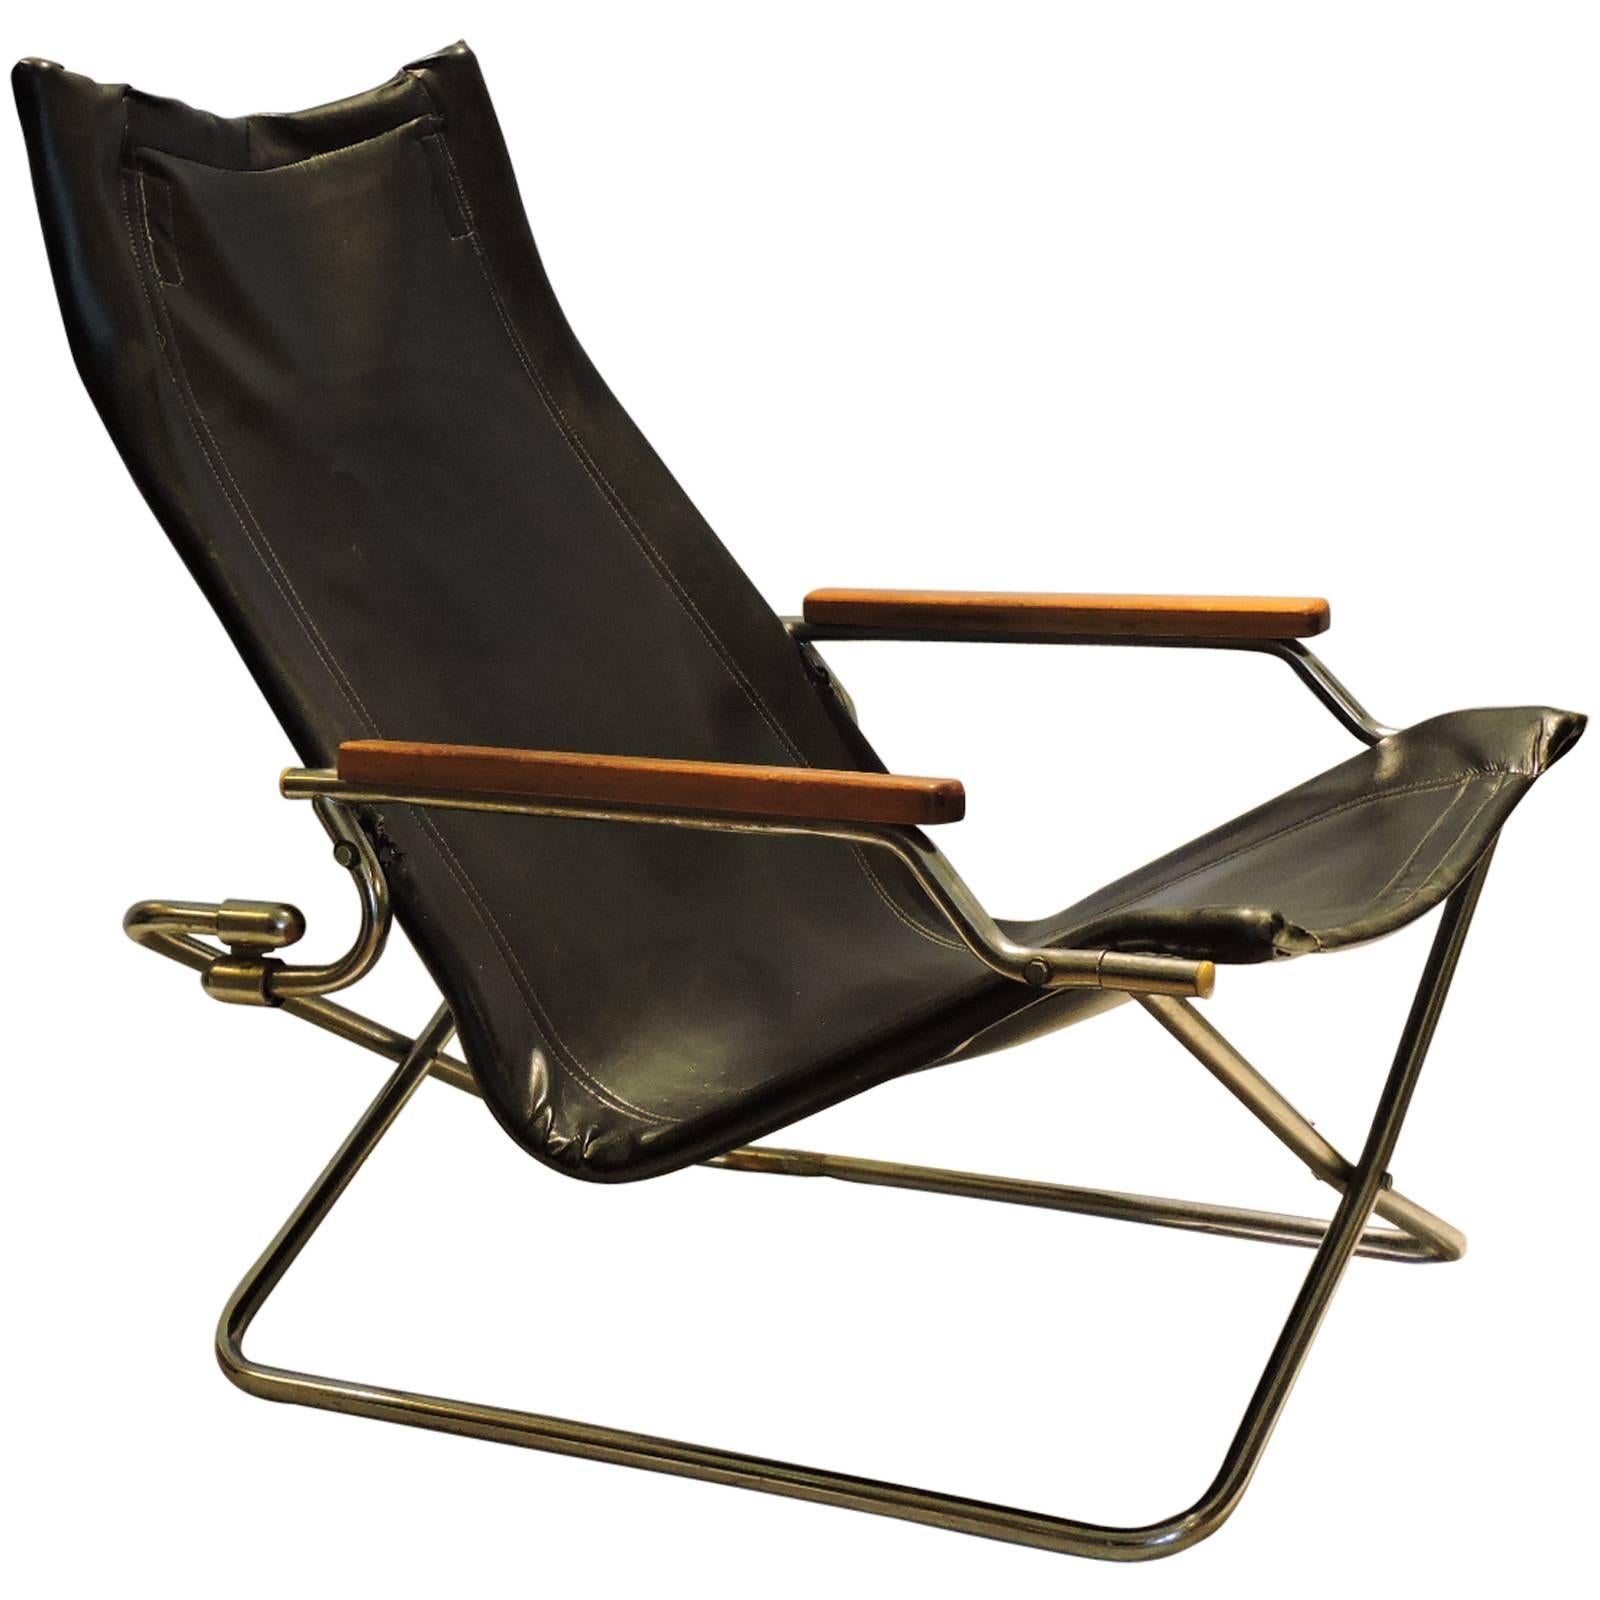 Japanese Modernist Folding Sling Chair by Uchida